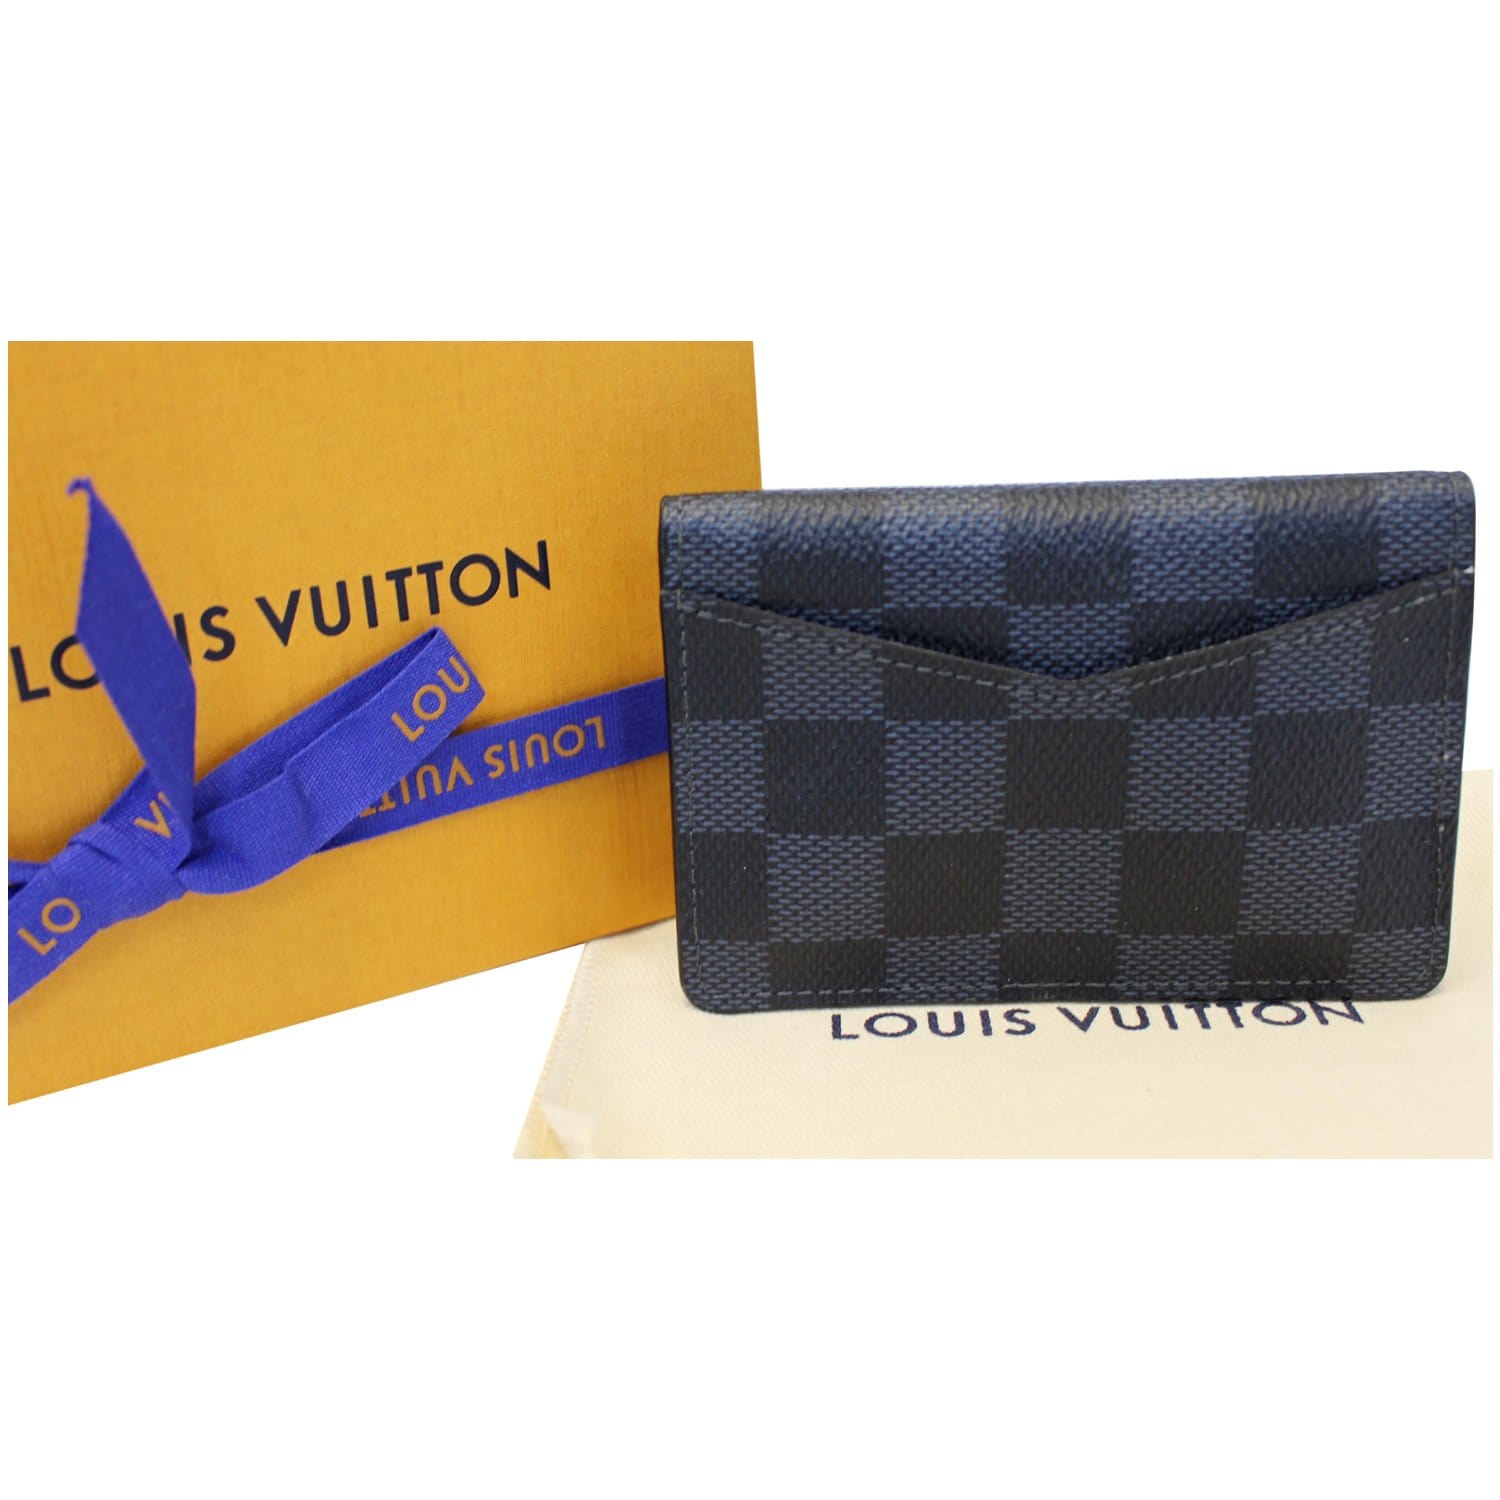 Louis Vuitton Women's Blue Wallets & Card Holders